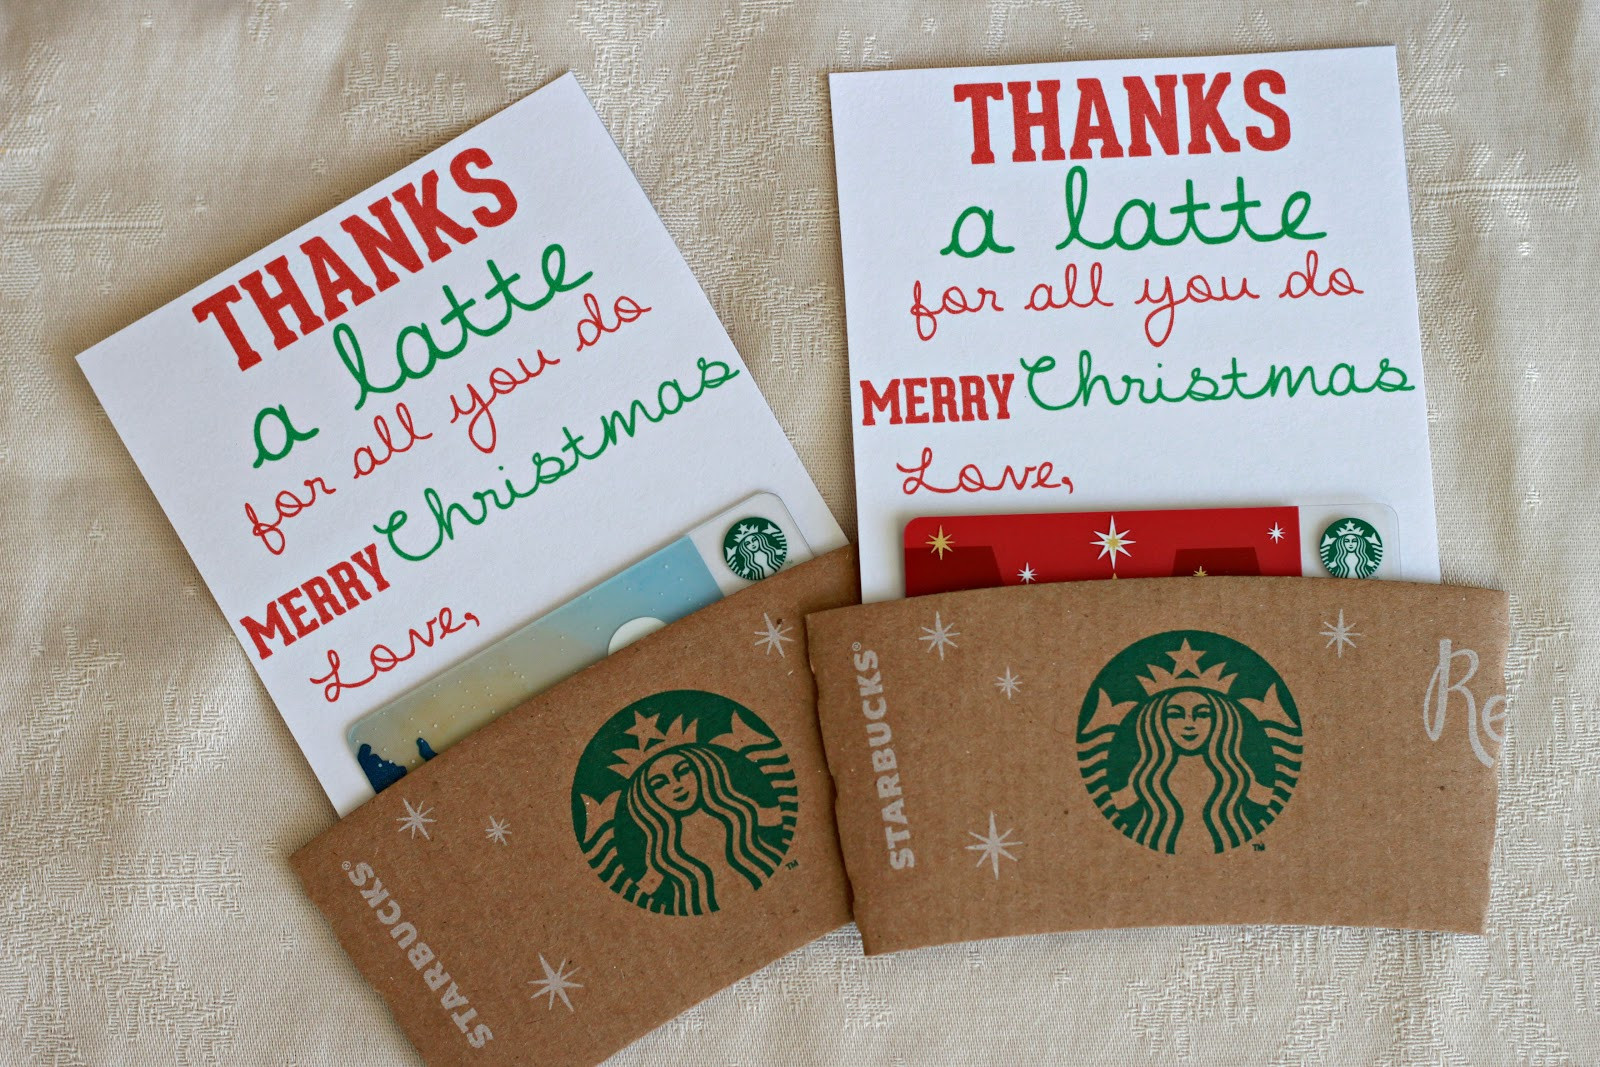 Best ideas about Cute Teacher Gift Ideas
. Save or Pin Man Starkey thanks a latte Now.